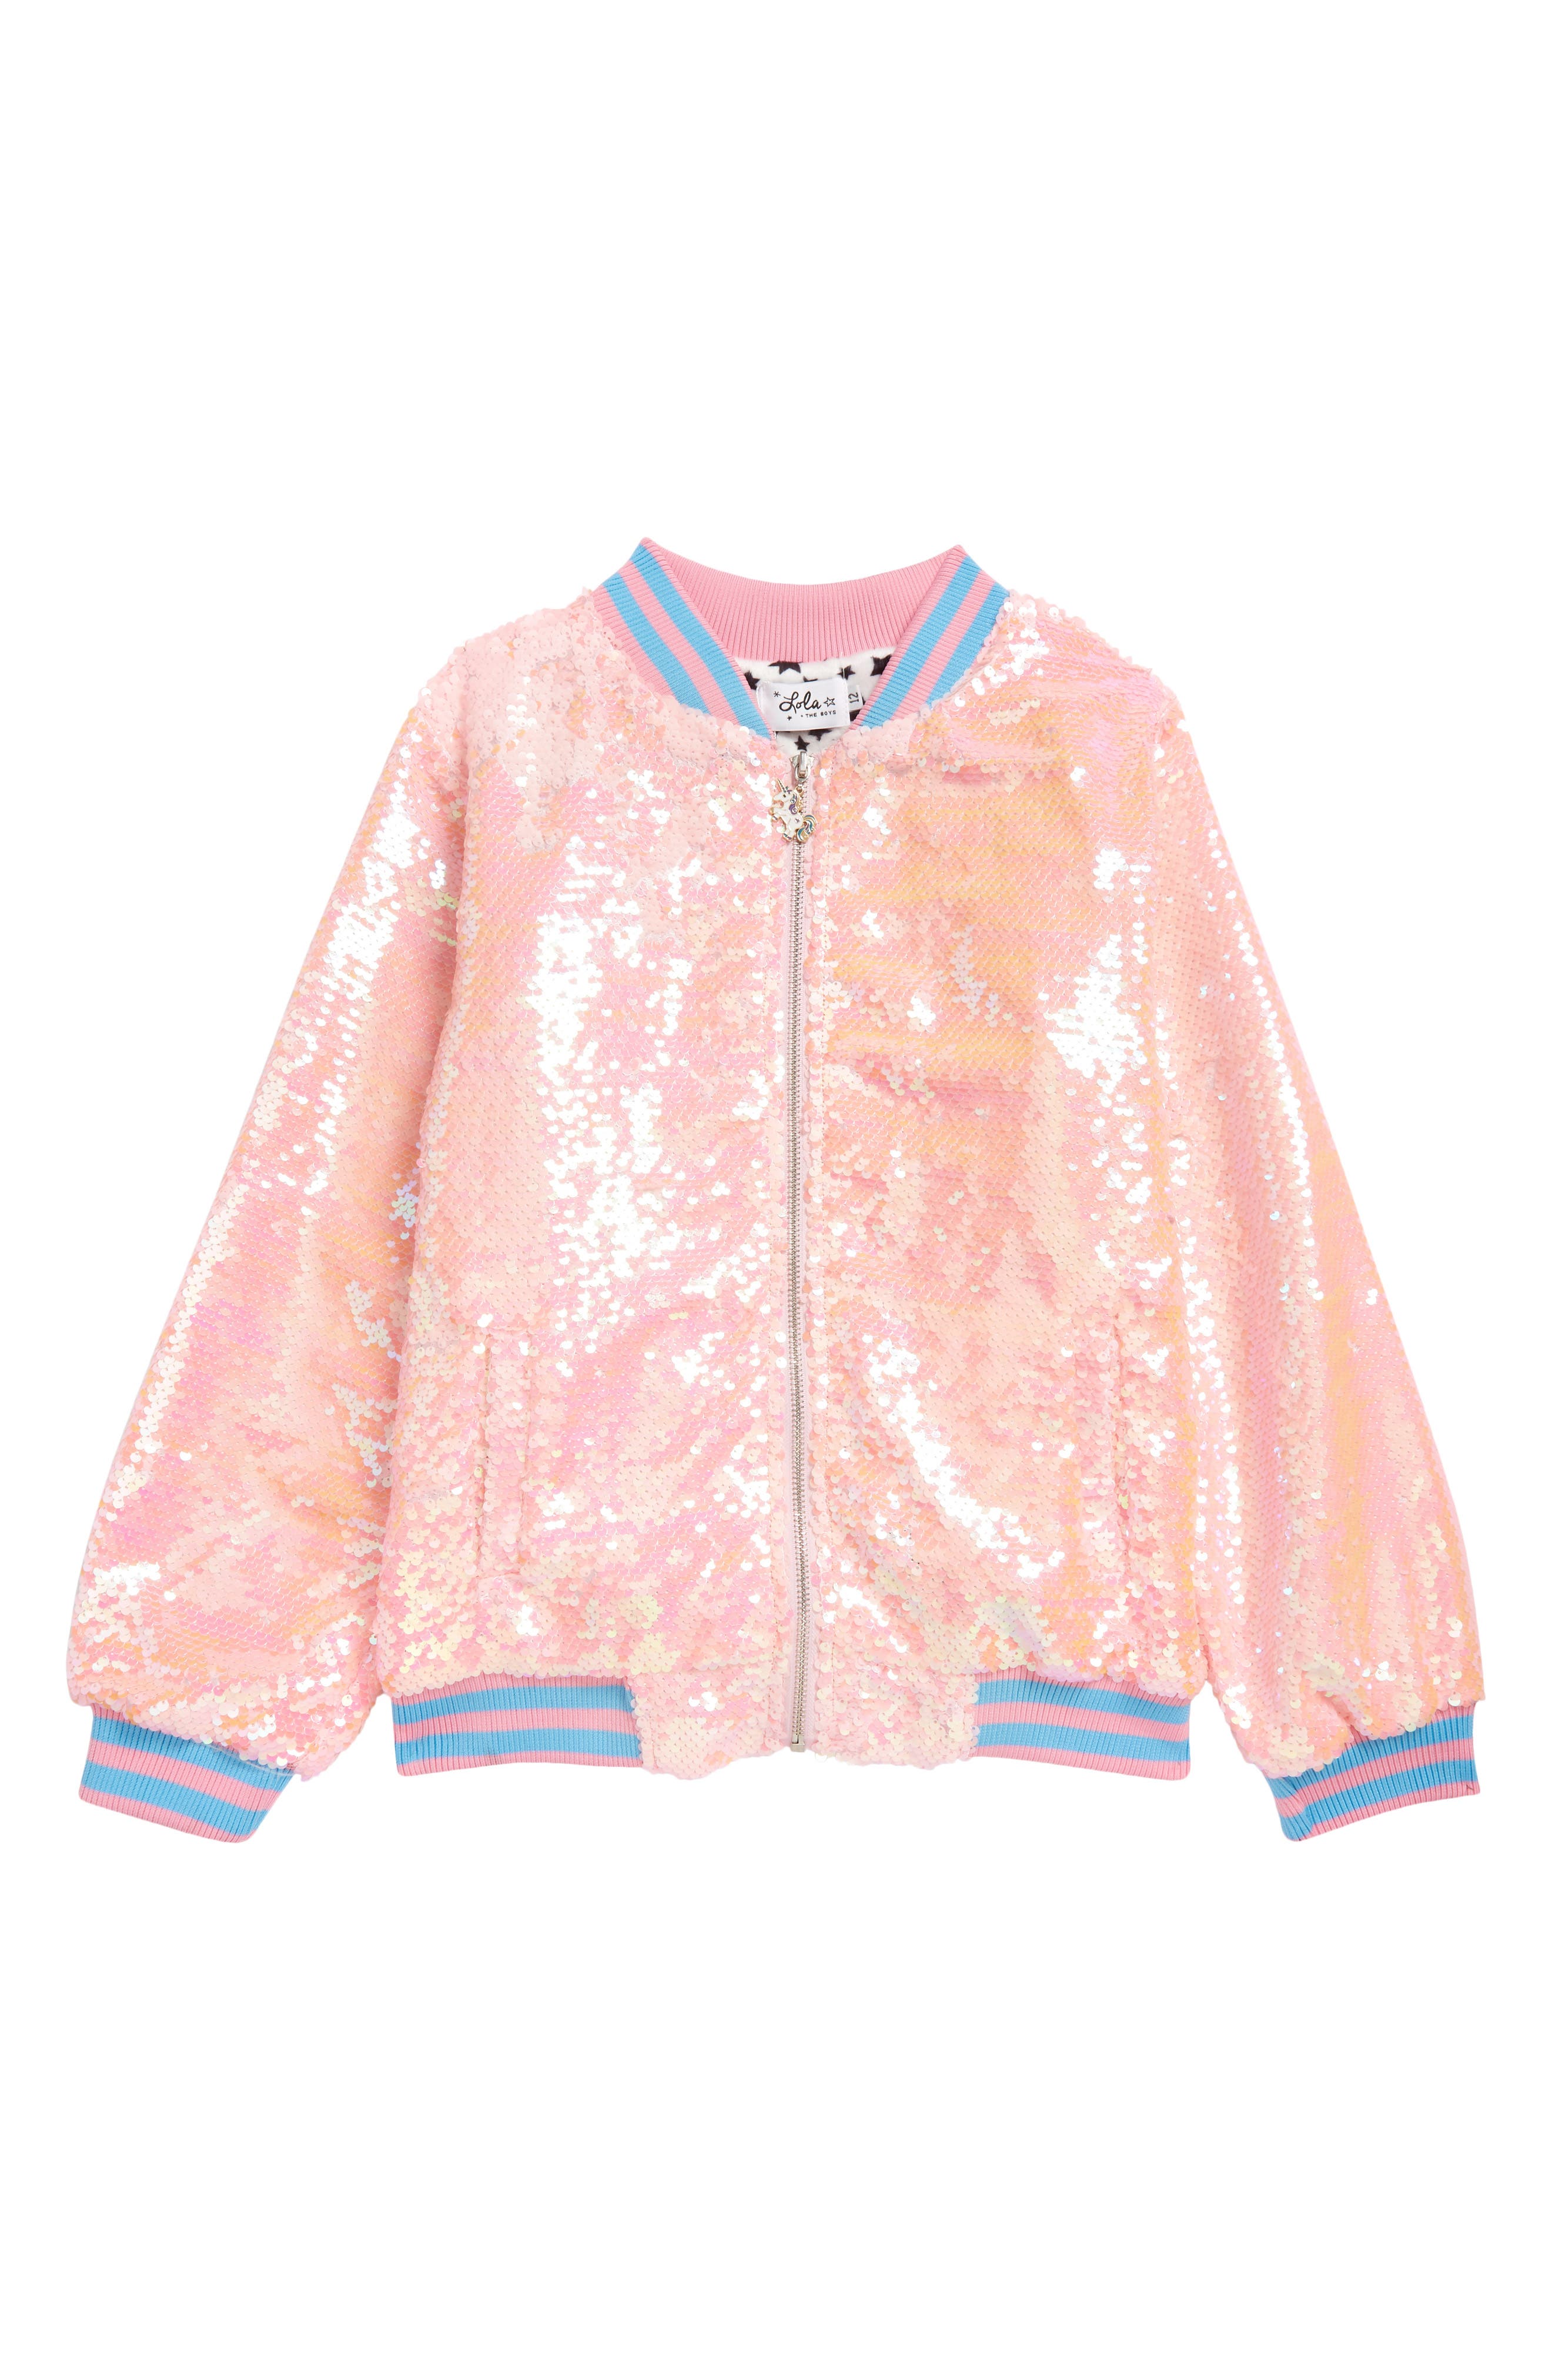 Borlai 1-6 Kids Toddler Girl Long Sleeve Sequin Zipper Coat Outwear Fashion Jacket 